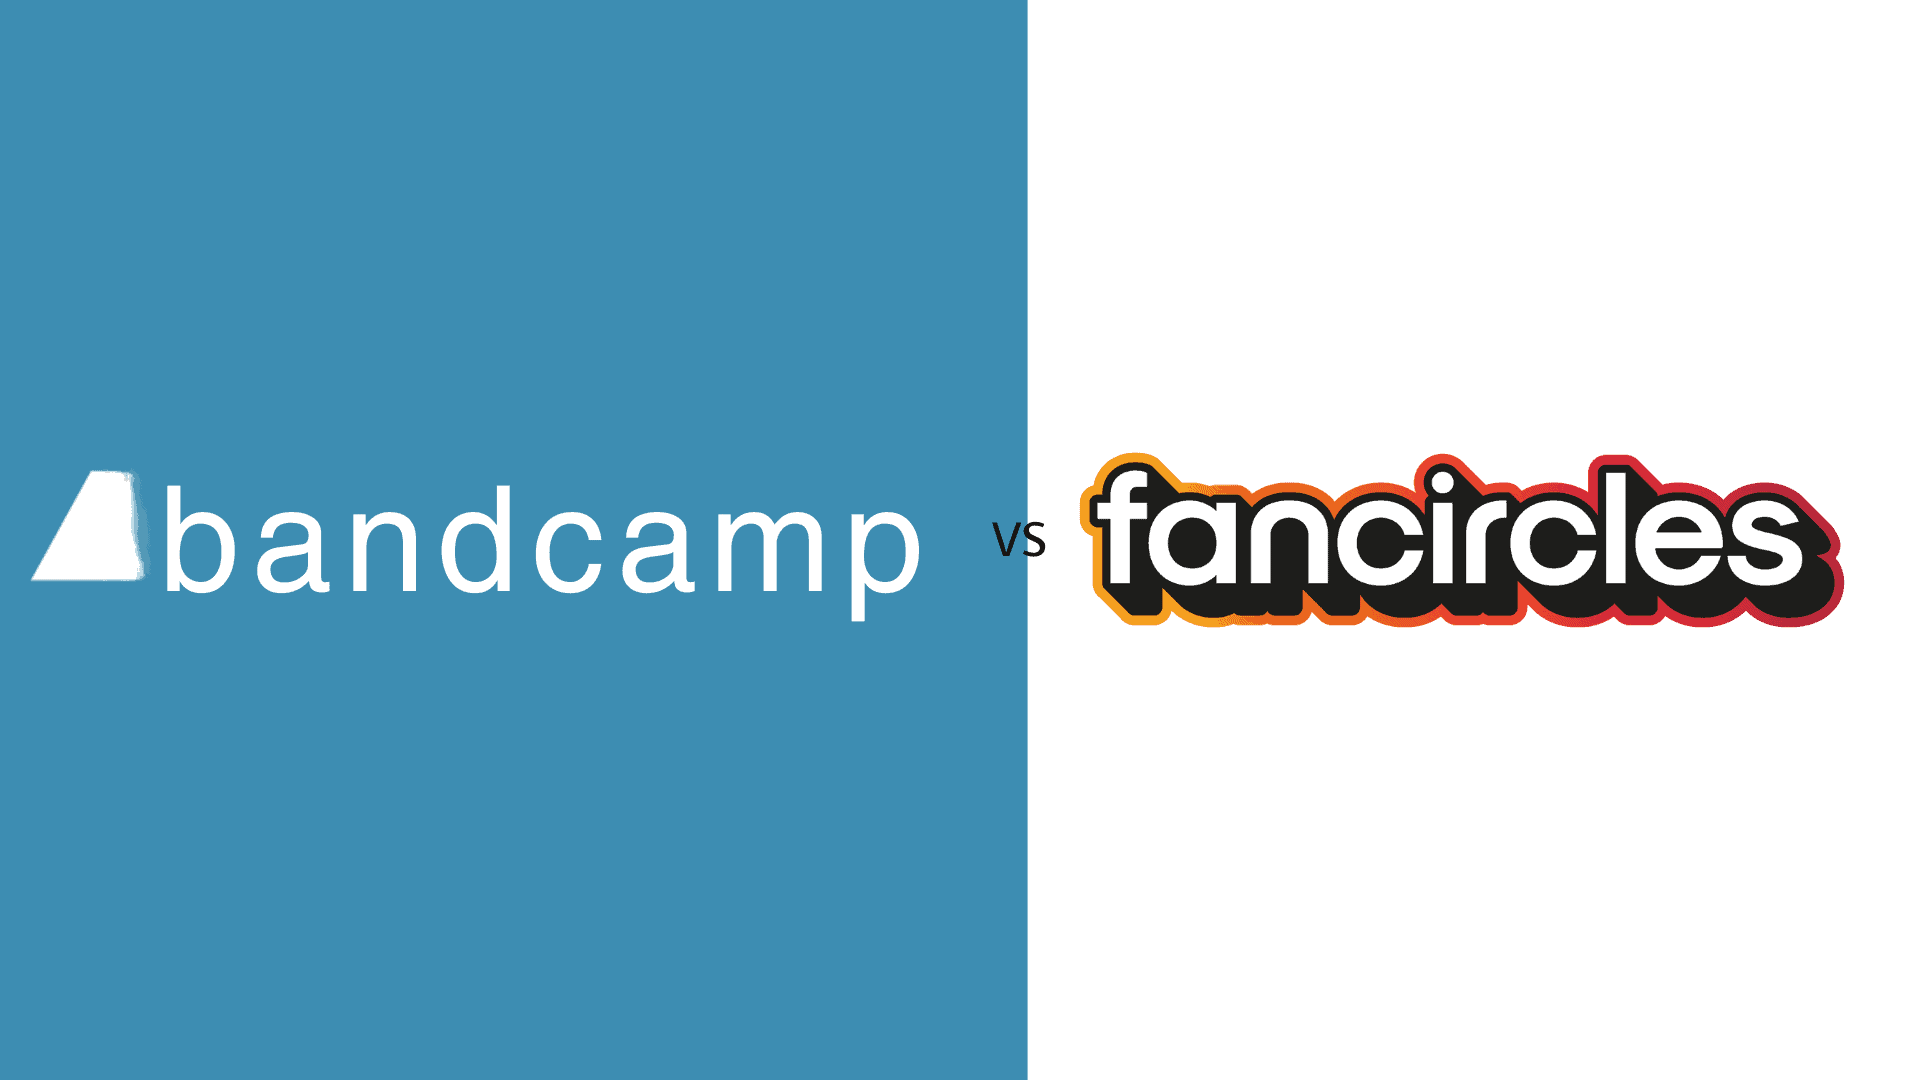 alternatives to bandcamp